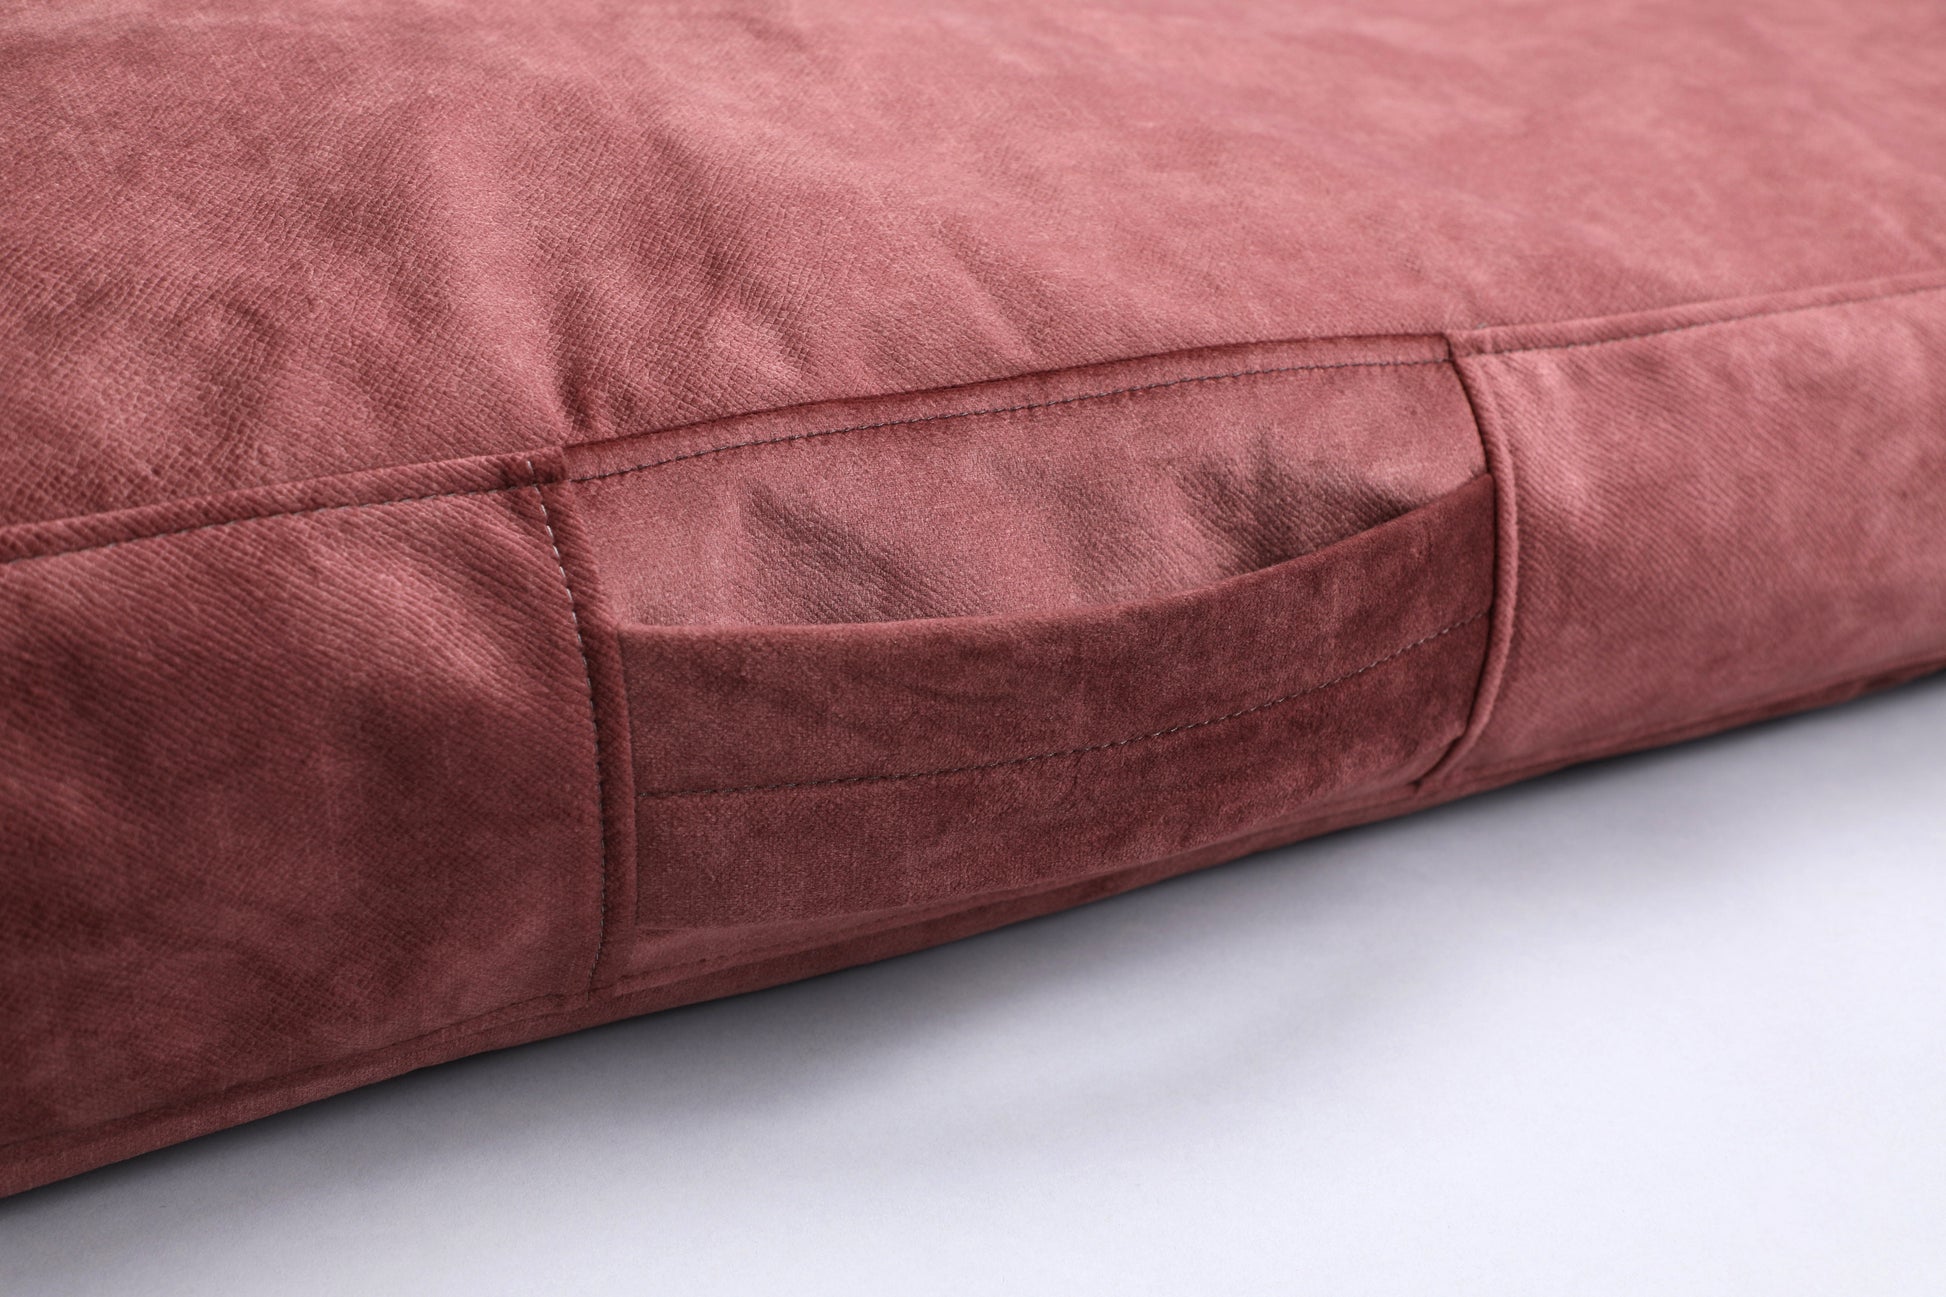 Dog cushion bed | 2-sided | TERRACOTTA - premium dog goods handmade in Europe by animalistus